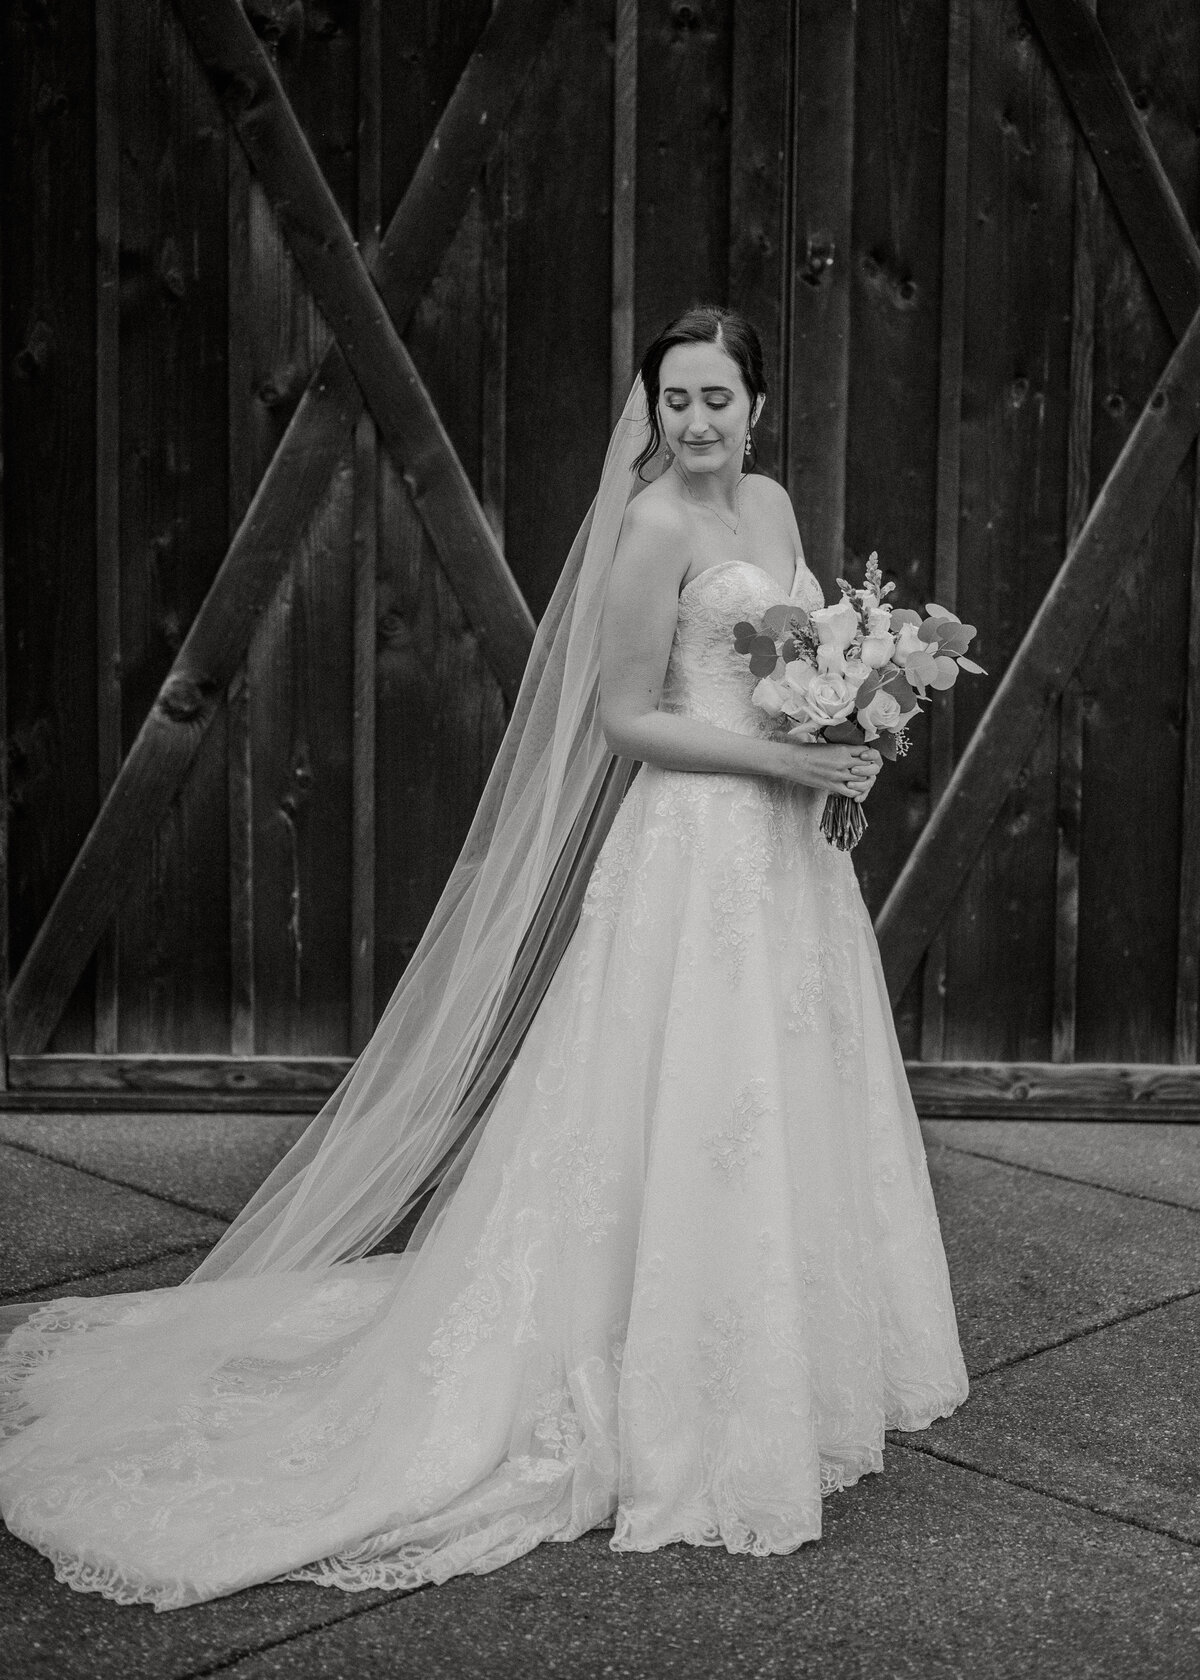 leavenworth wedding photographer - abbygale marie photography -16